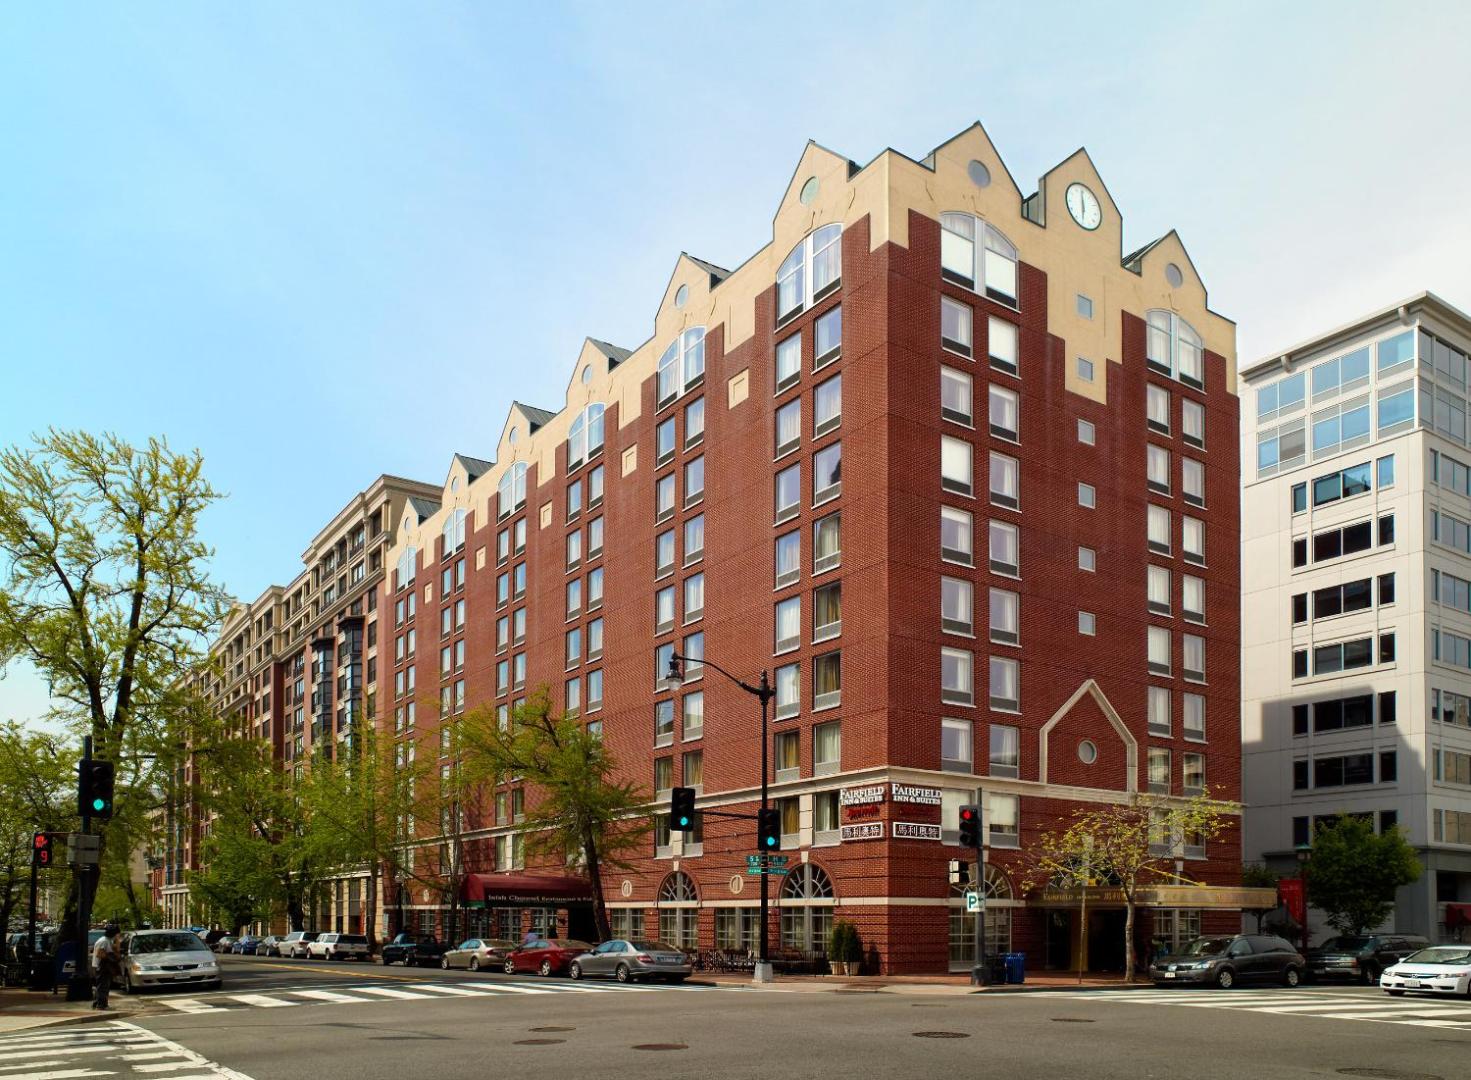 Fairfield Inn & Suites Washington, DC/Downtown